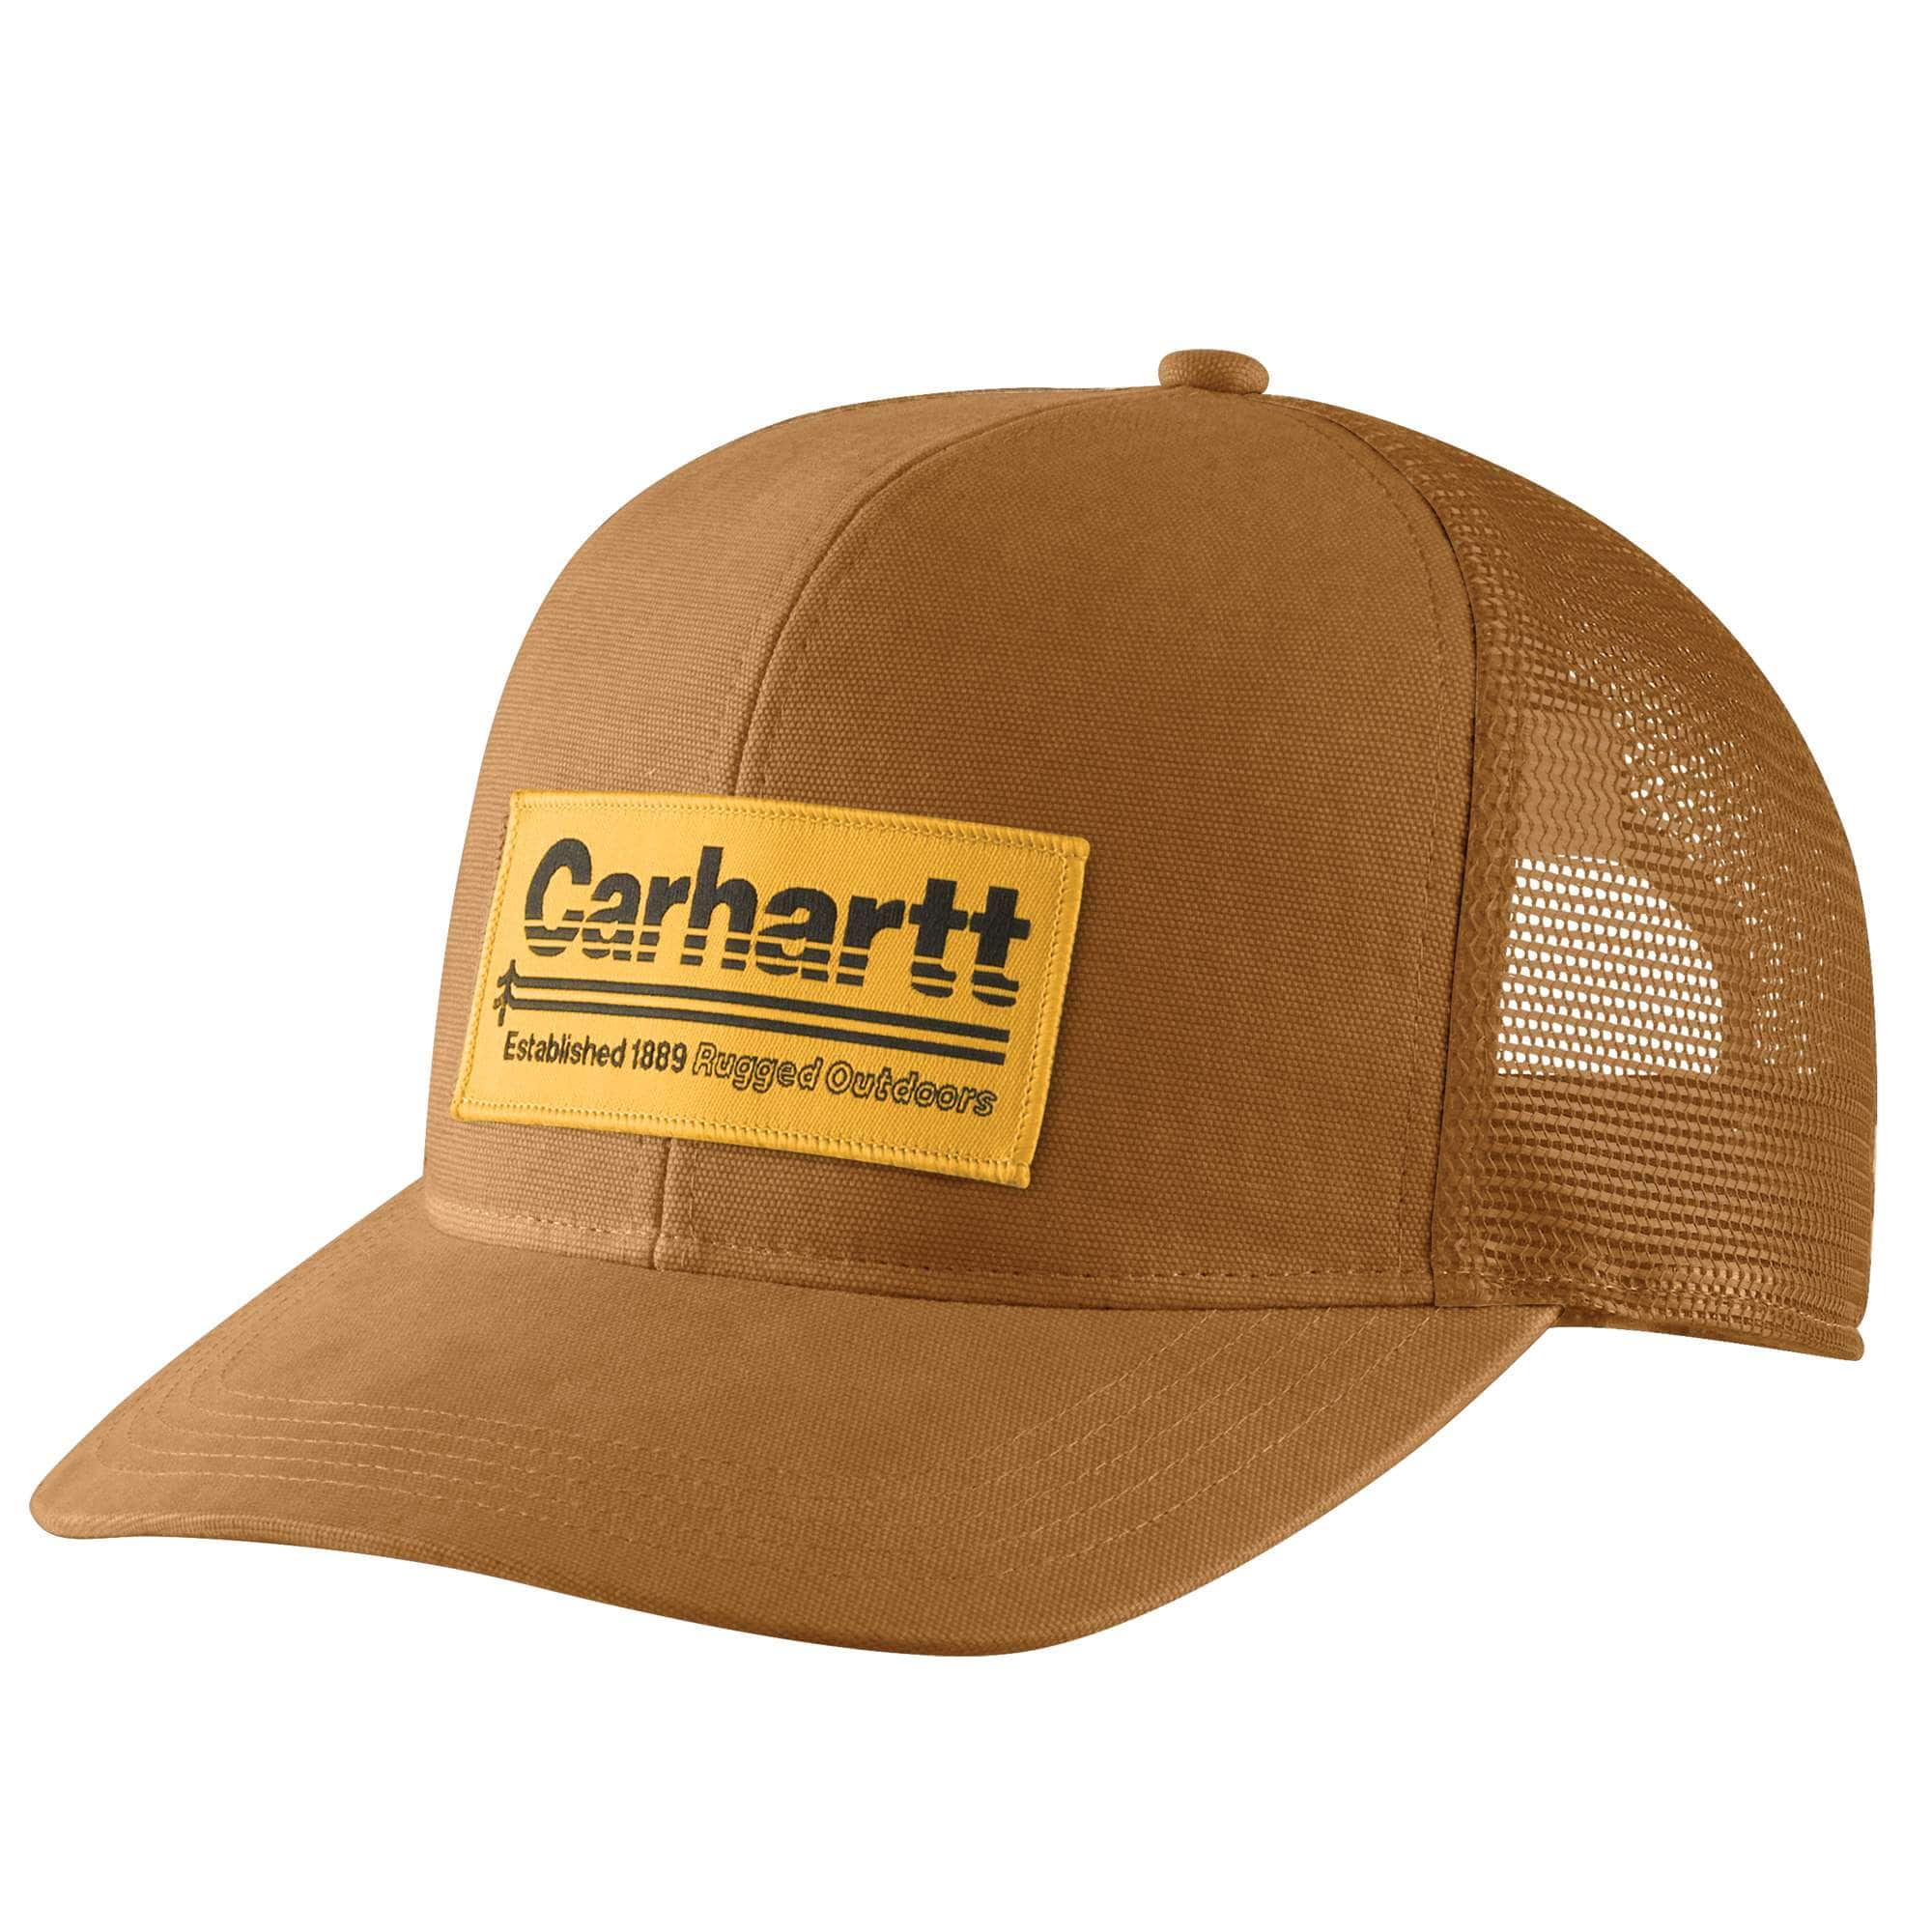 Carhartt Men's Moonstone Canvas Mesh-Back Outdoors Patch Cap